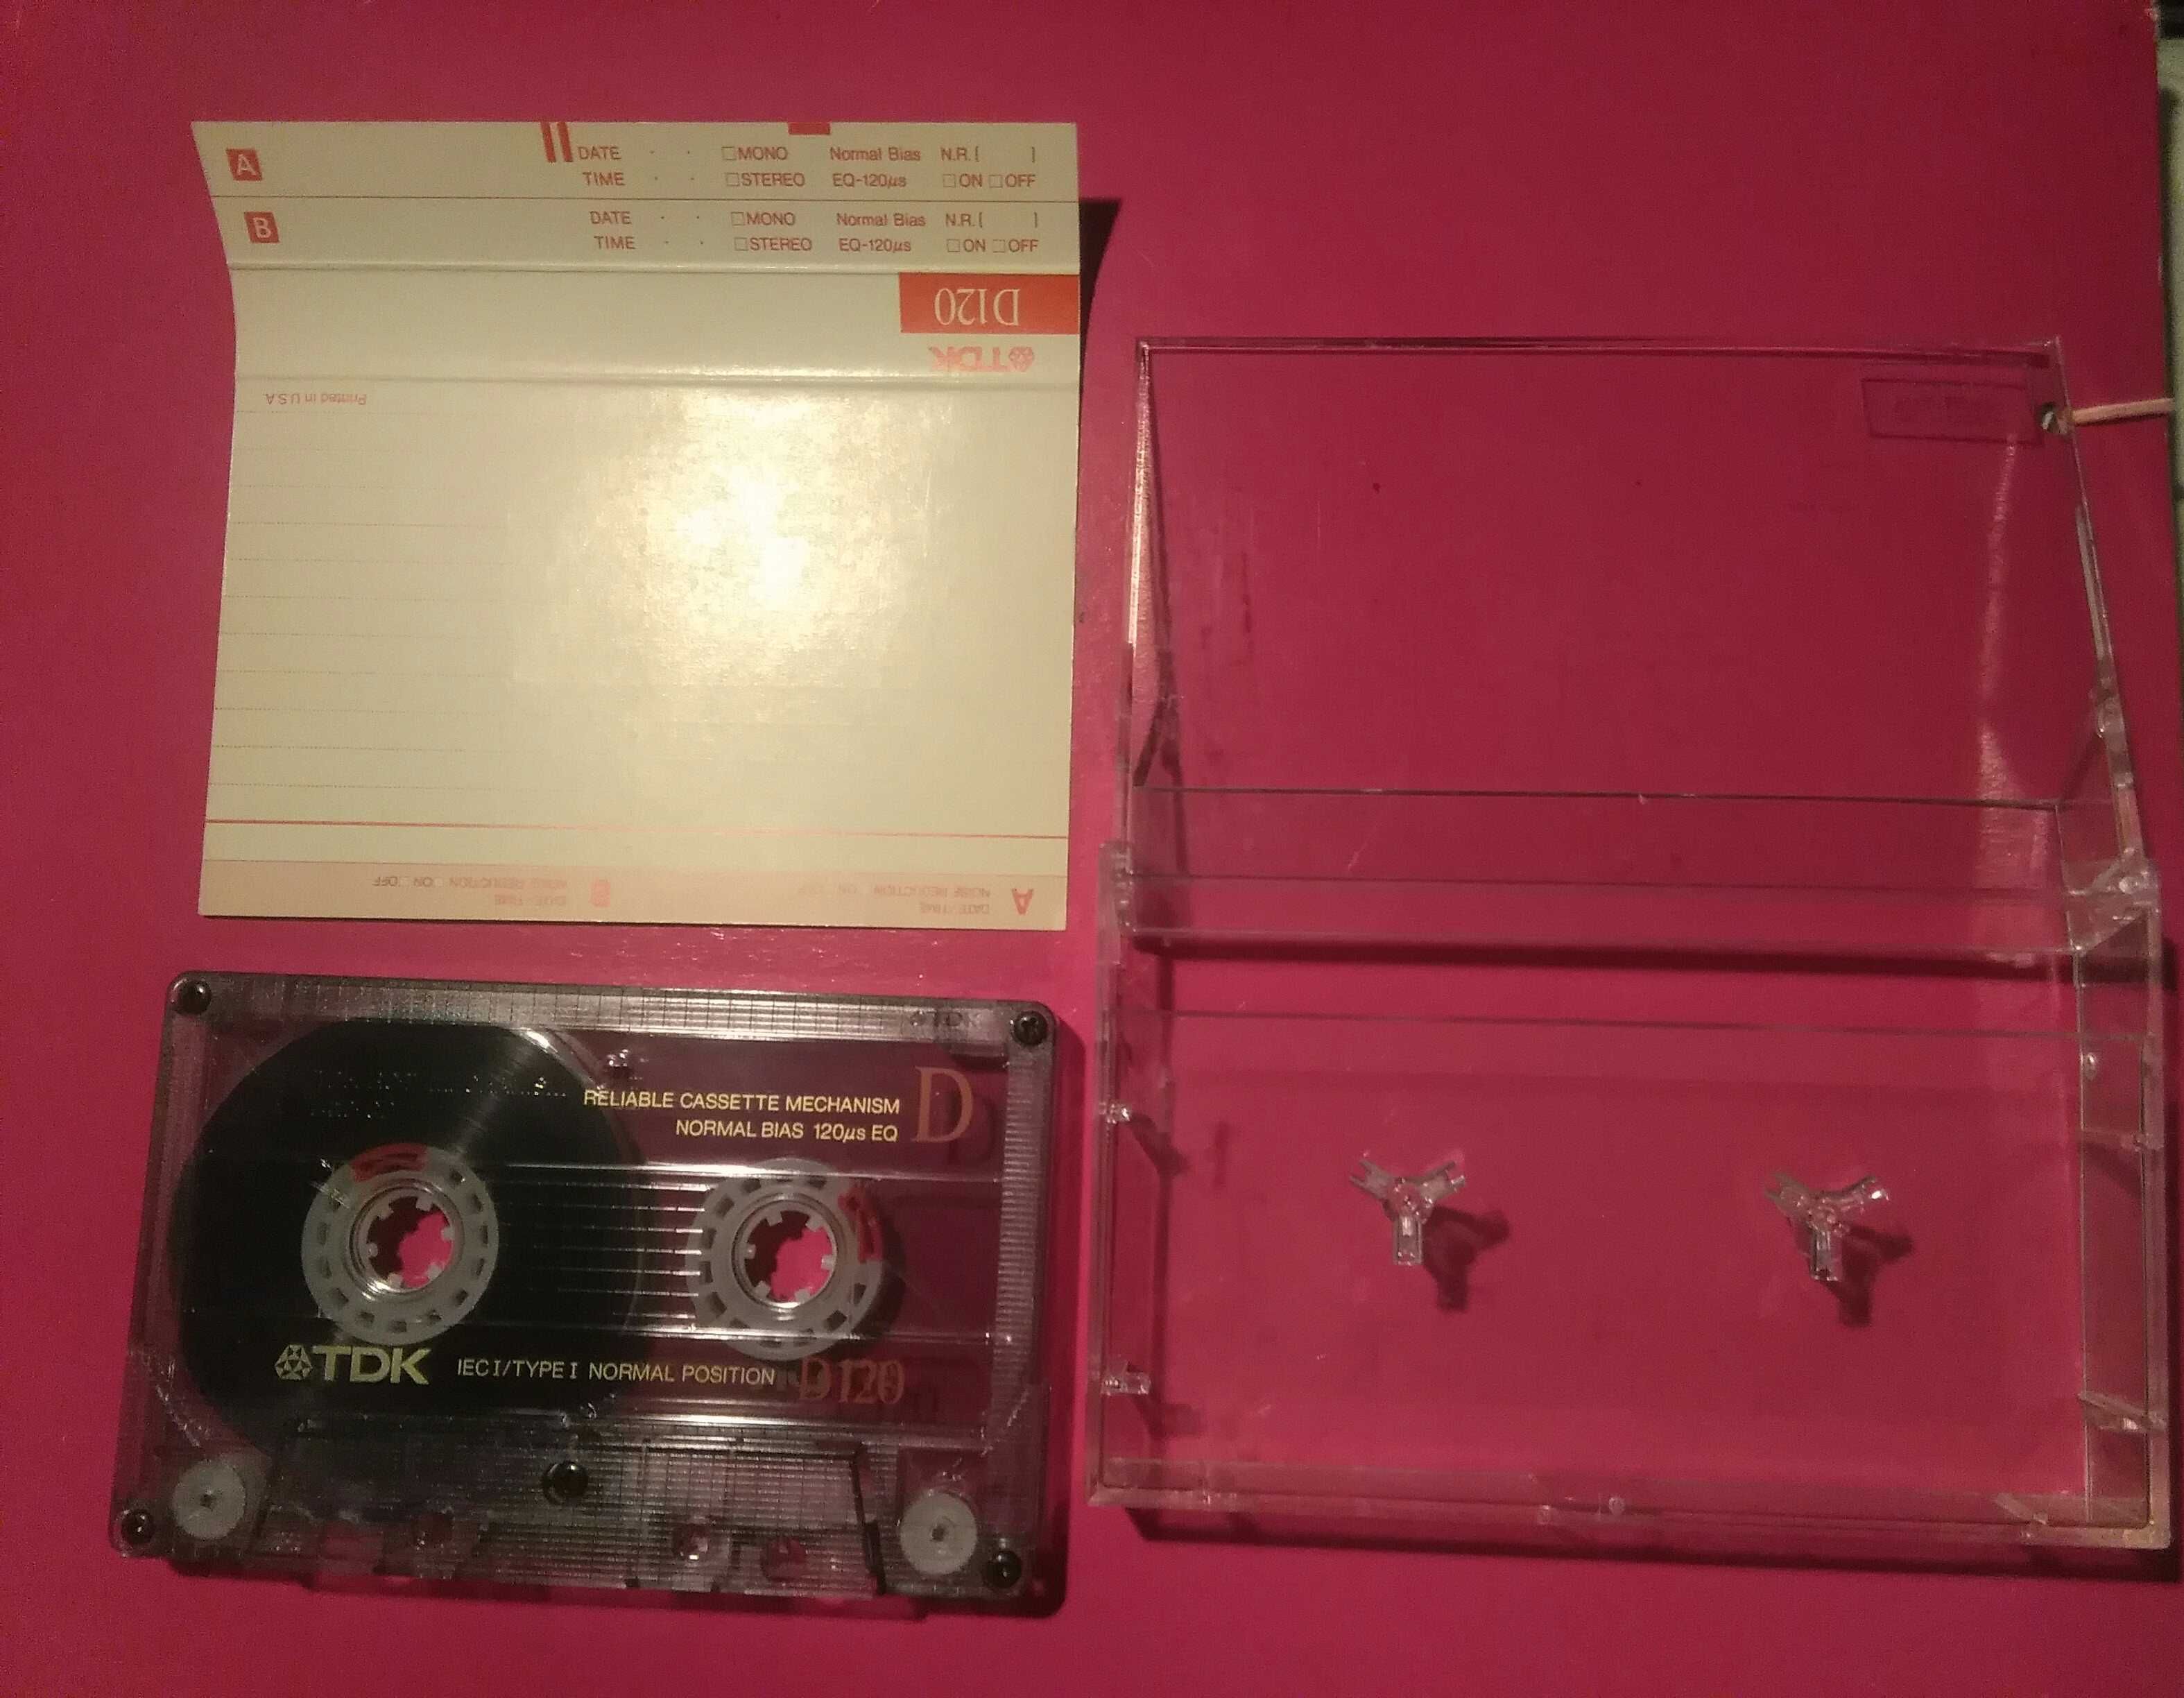 TDK D 120 - kaseta żelazowa z lat 1988 - 89, wkładka bez wpisów